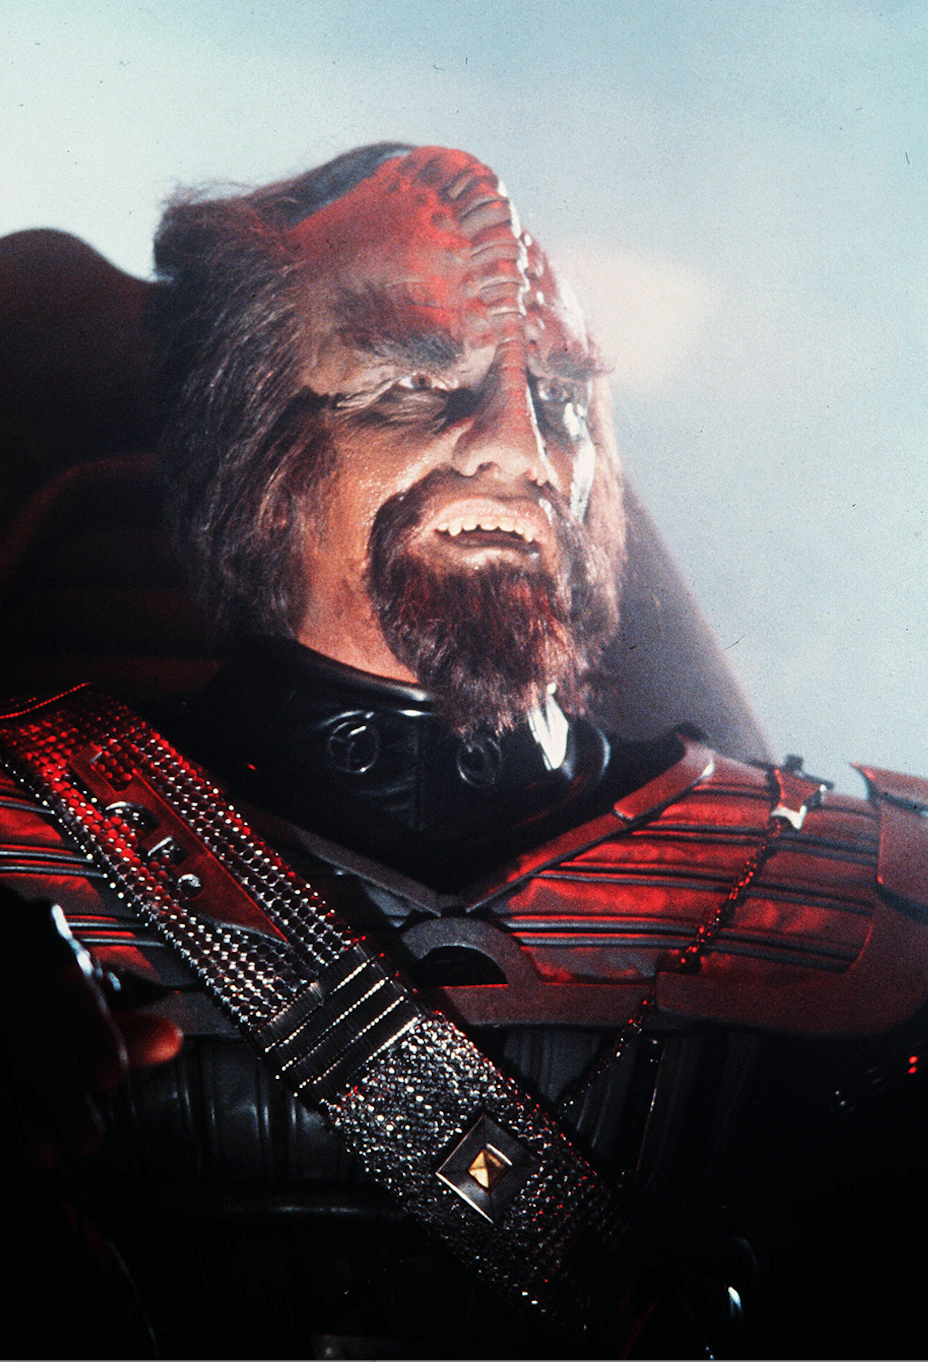 new klingons